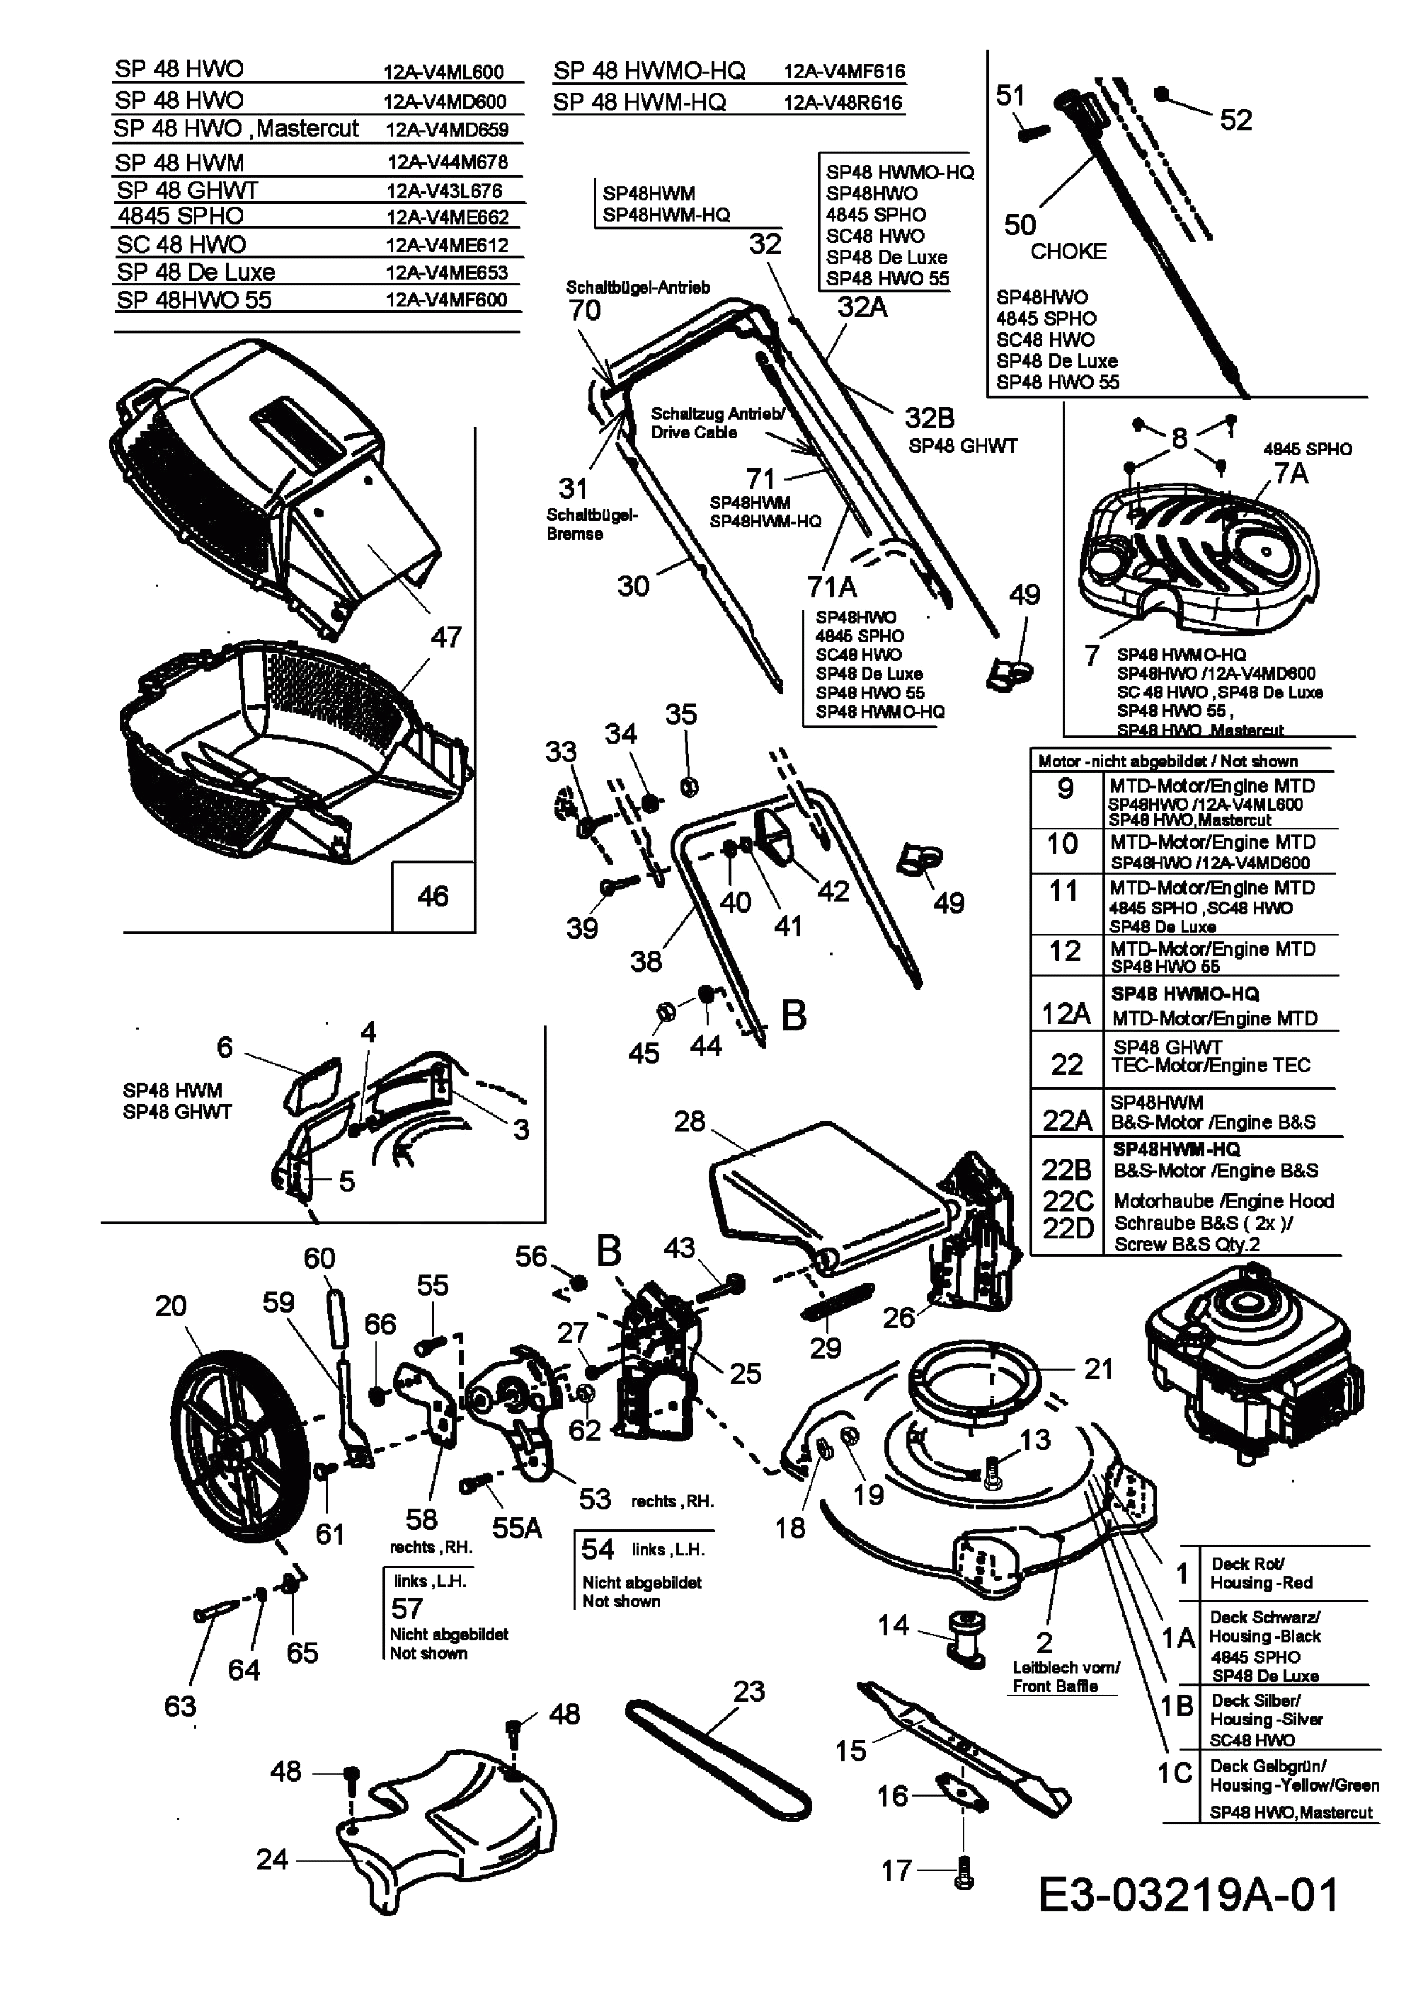 MTD Артикул 12A-V4ME662 (год выпуска 2007). Основная деталировка